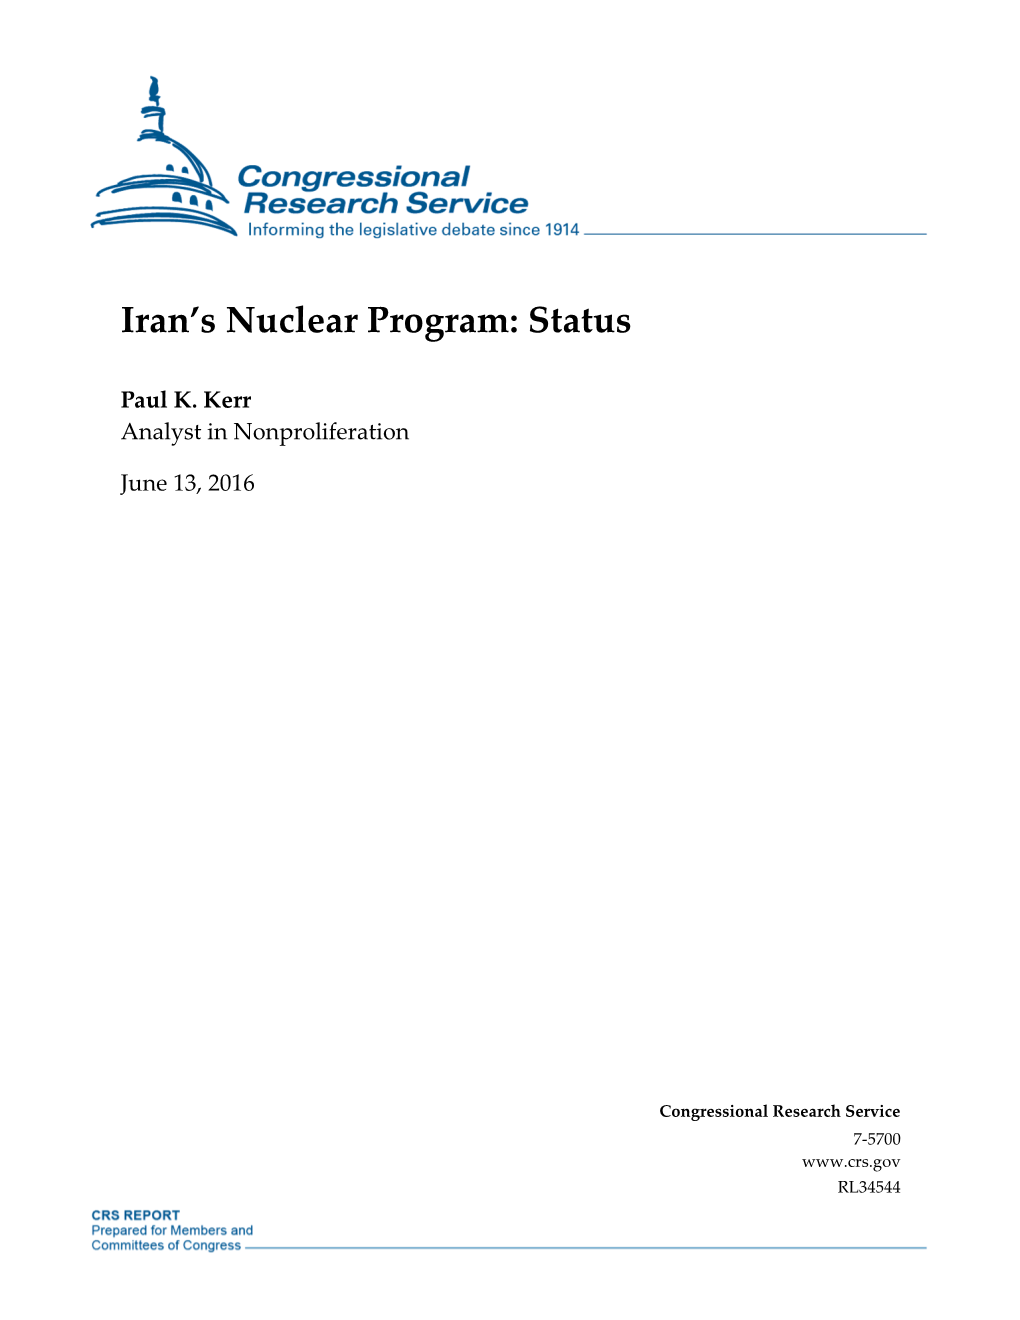 CRS Report: Iran's Nuclear Program: Status